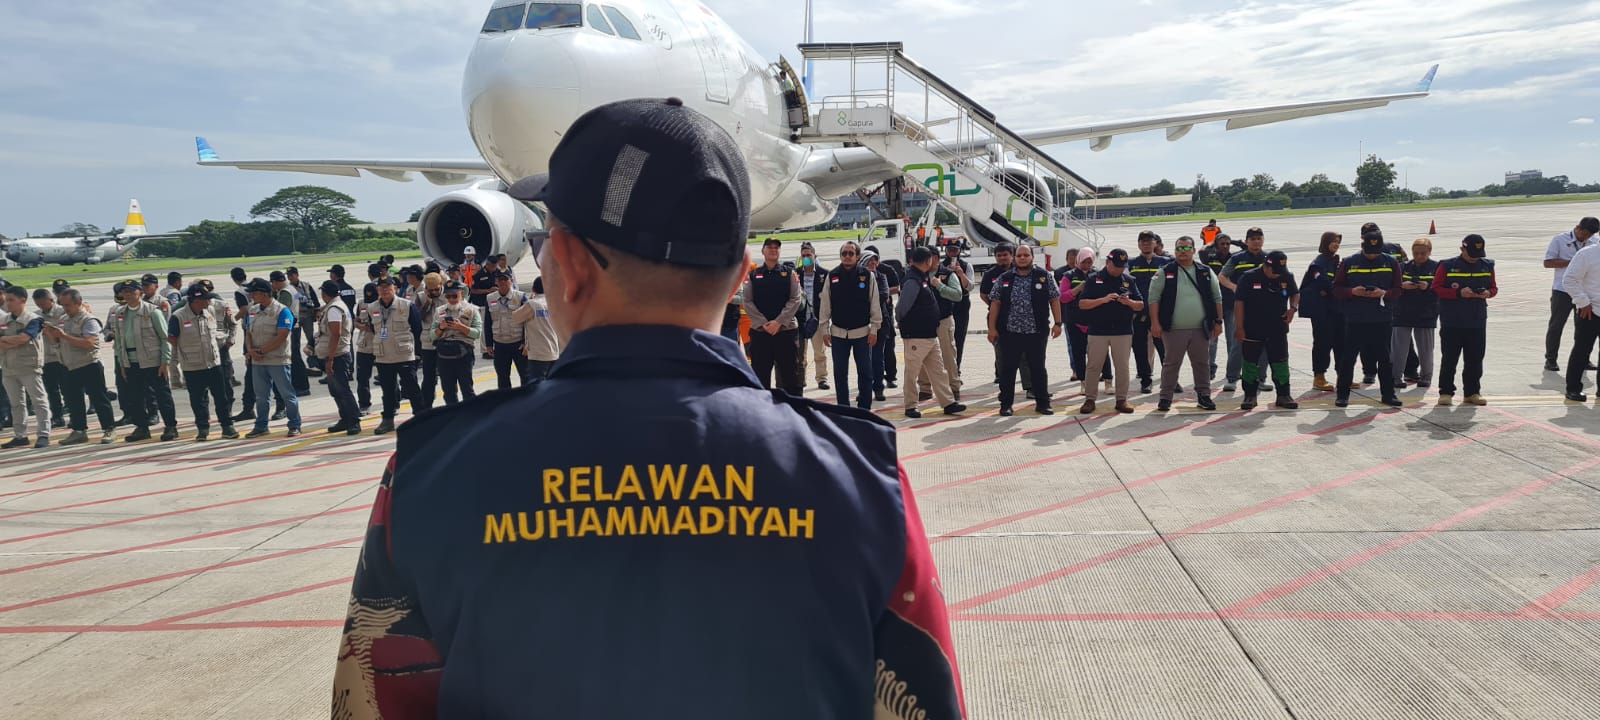 EMT Muhammadiyah – EMT Indonesia : 119 personil bergerak ke Turkey dengan Pesawat Garuda